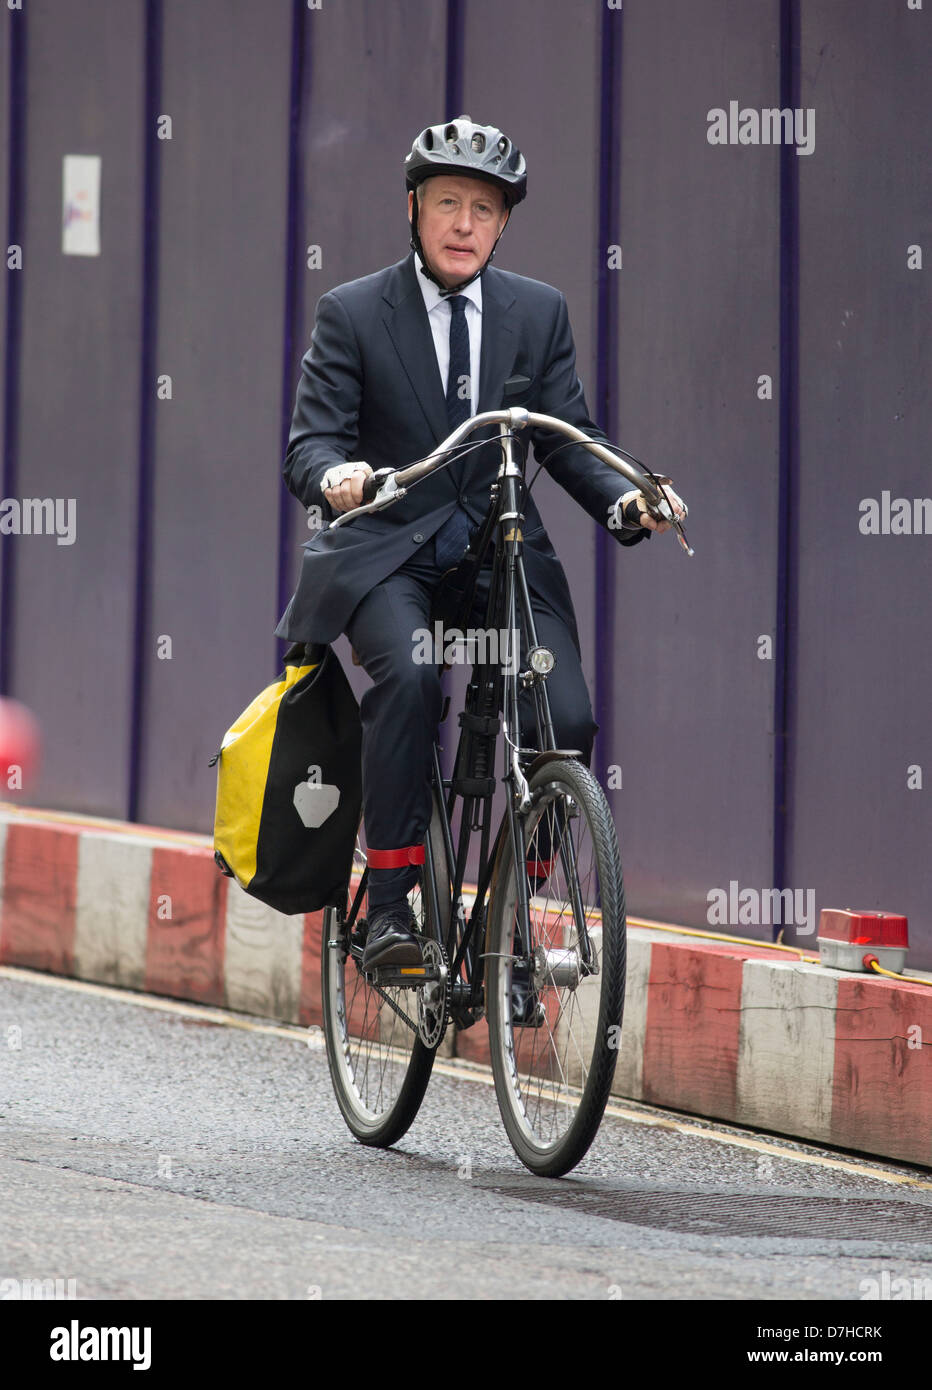 Businessman weird bicycle unusual handlebars Stock Photo